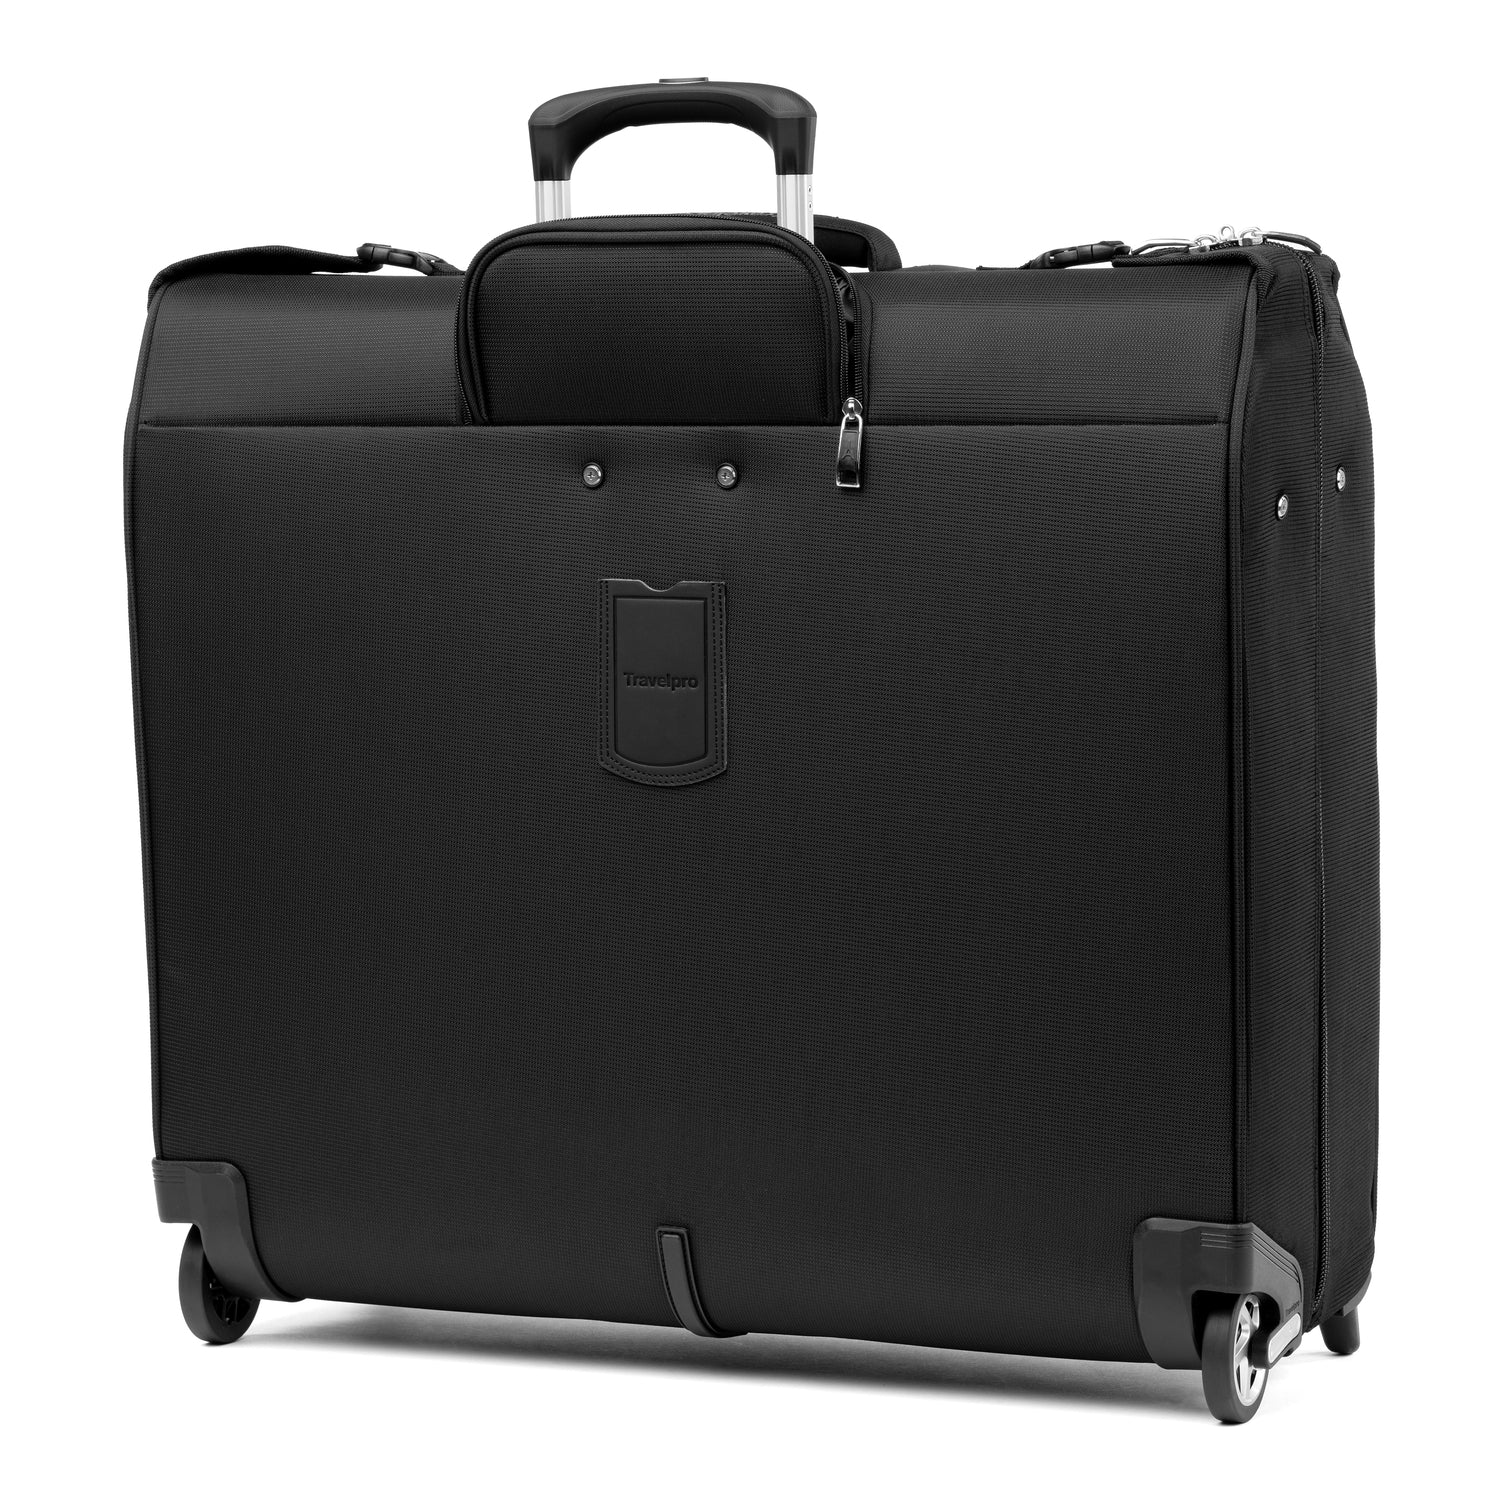 Jaguar garment travel bag. Carry On Garment Bag for Business Trips for Sale  in Keller, TX - OfferUp